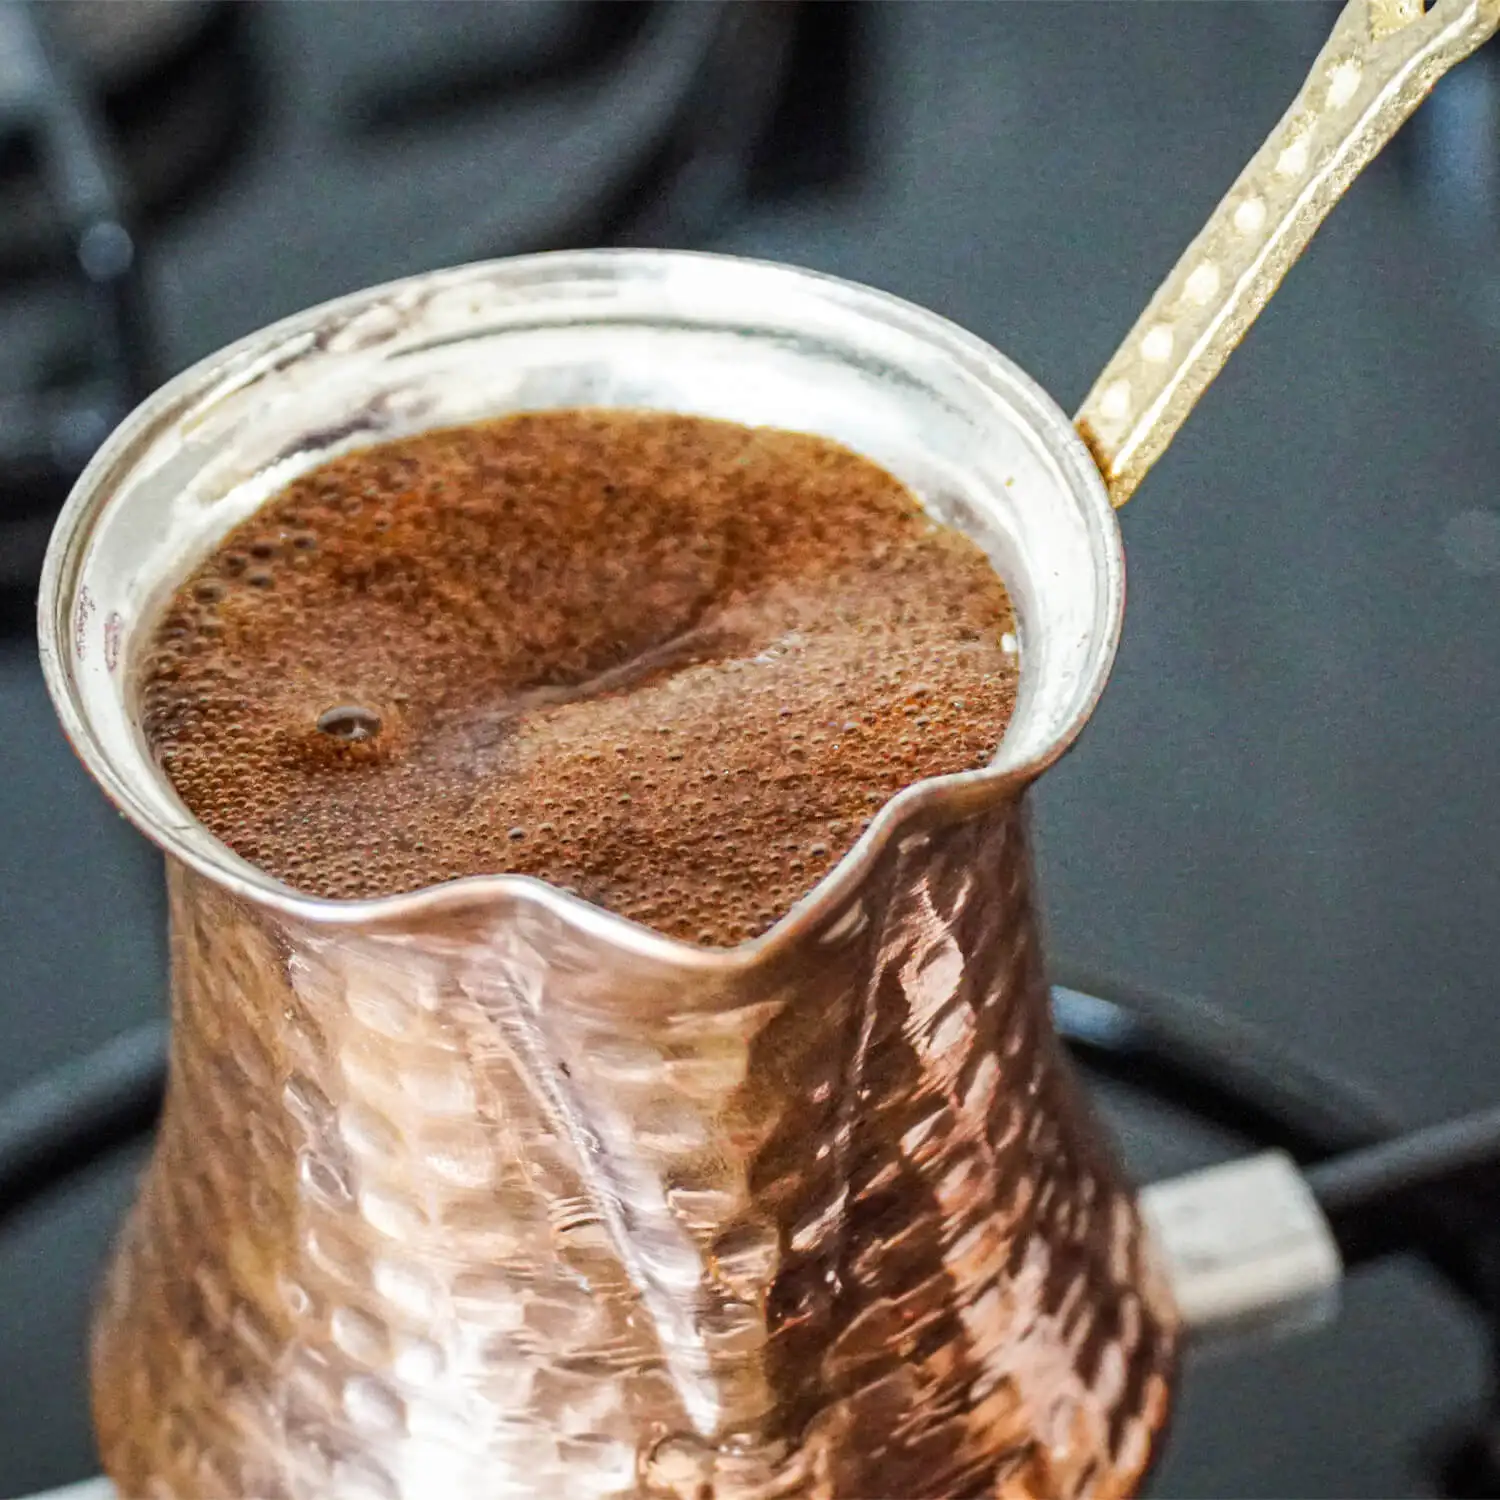 Jezve 6-7 Cups 18 Oz Copper Turka Turkish Coffee Pot Maker Cezve